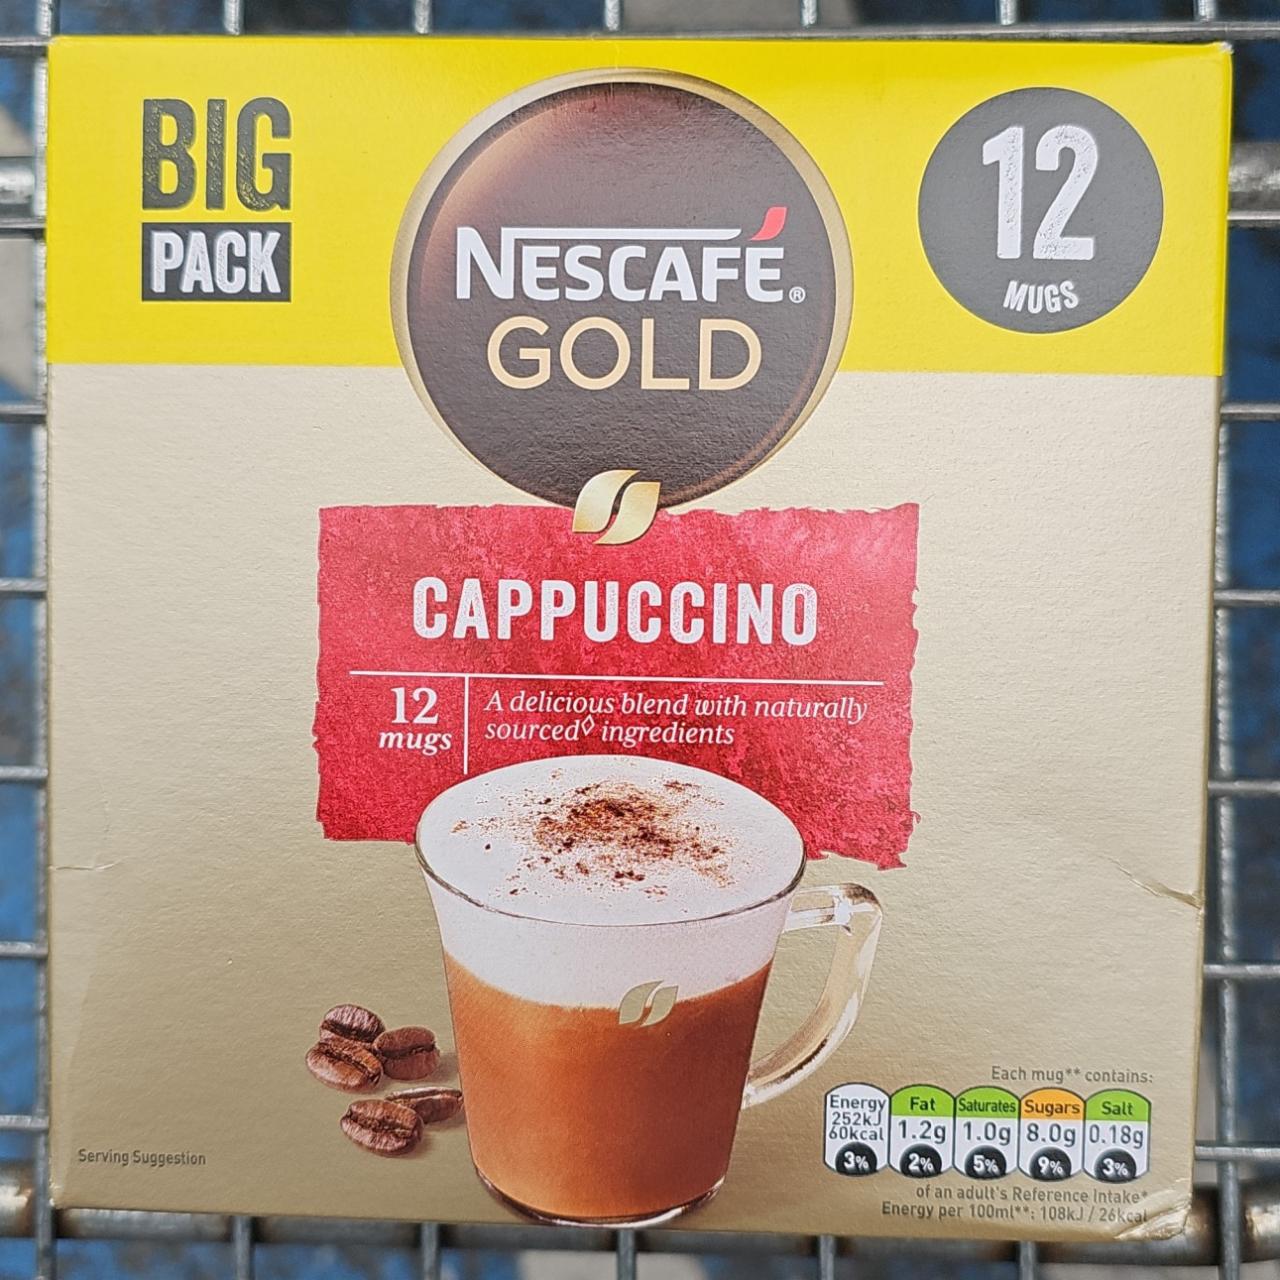 Képek - Nescafe Gold Cappuccino Big pack